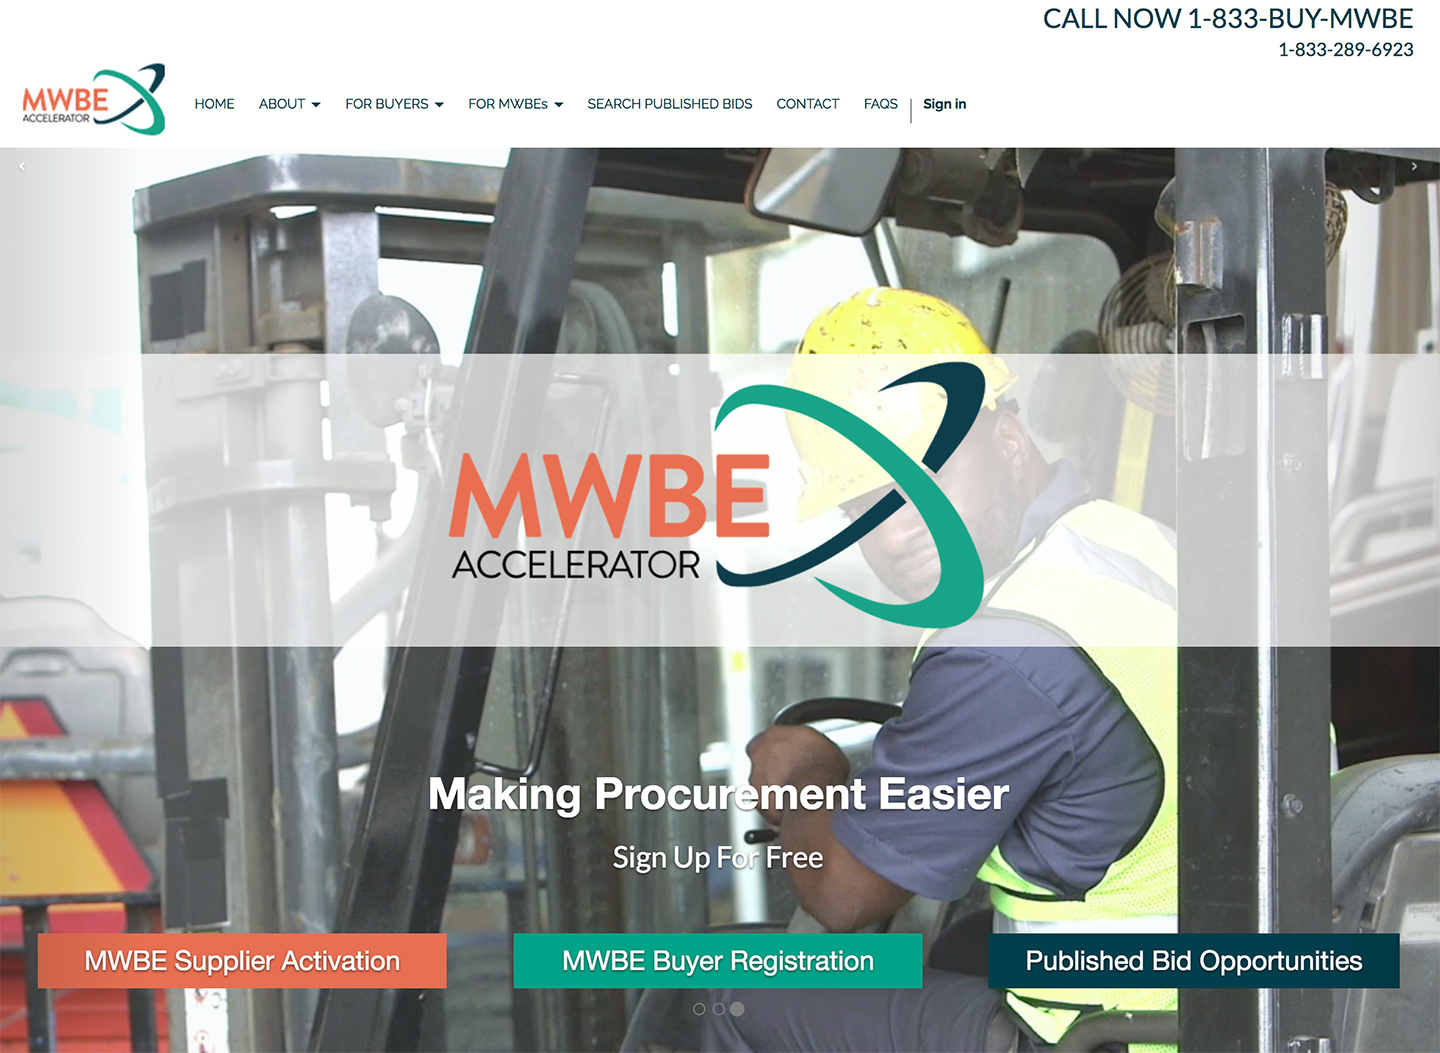 MWBE Accelerator: MWBE Accelerator Homepage